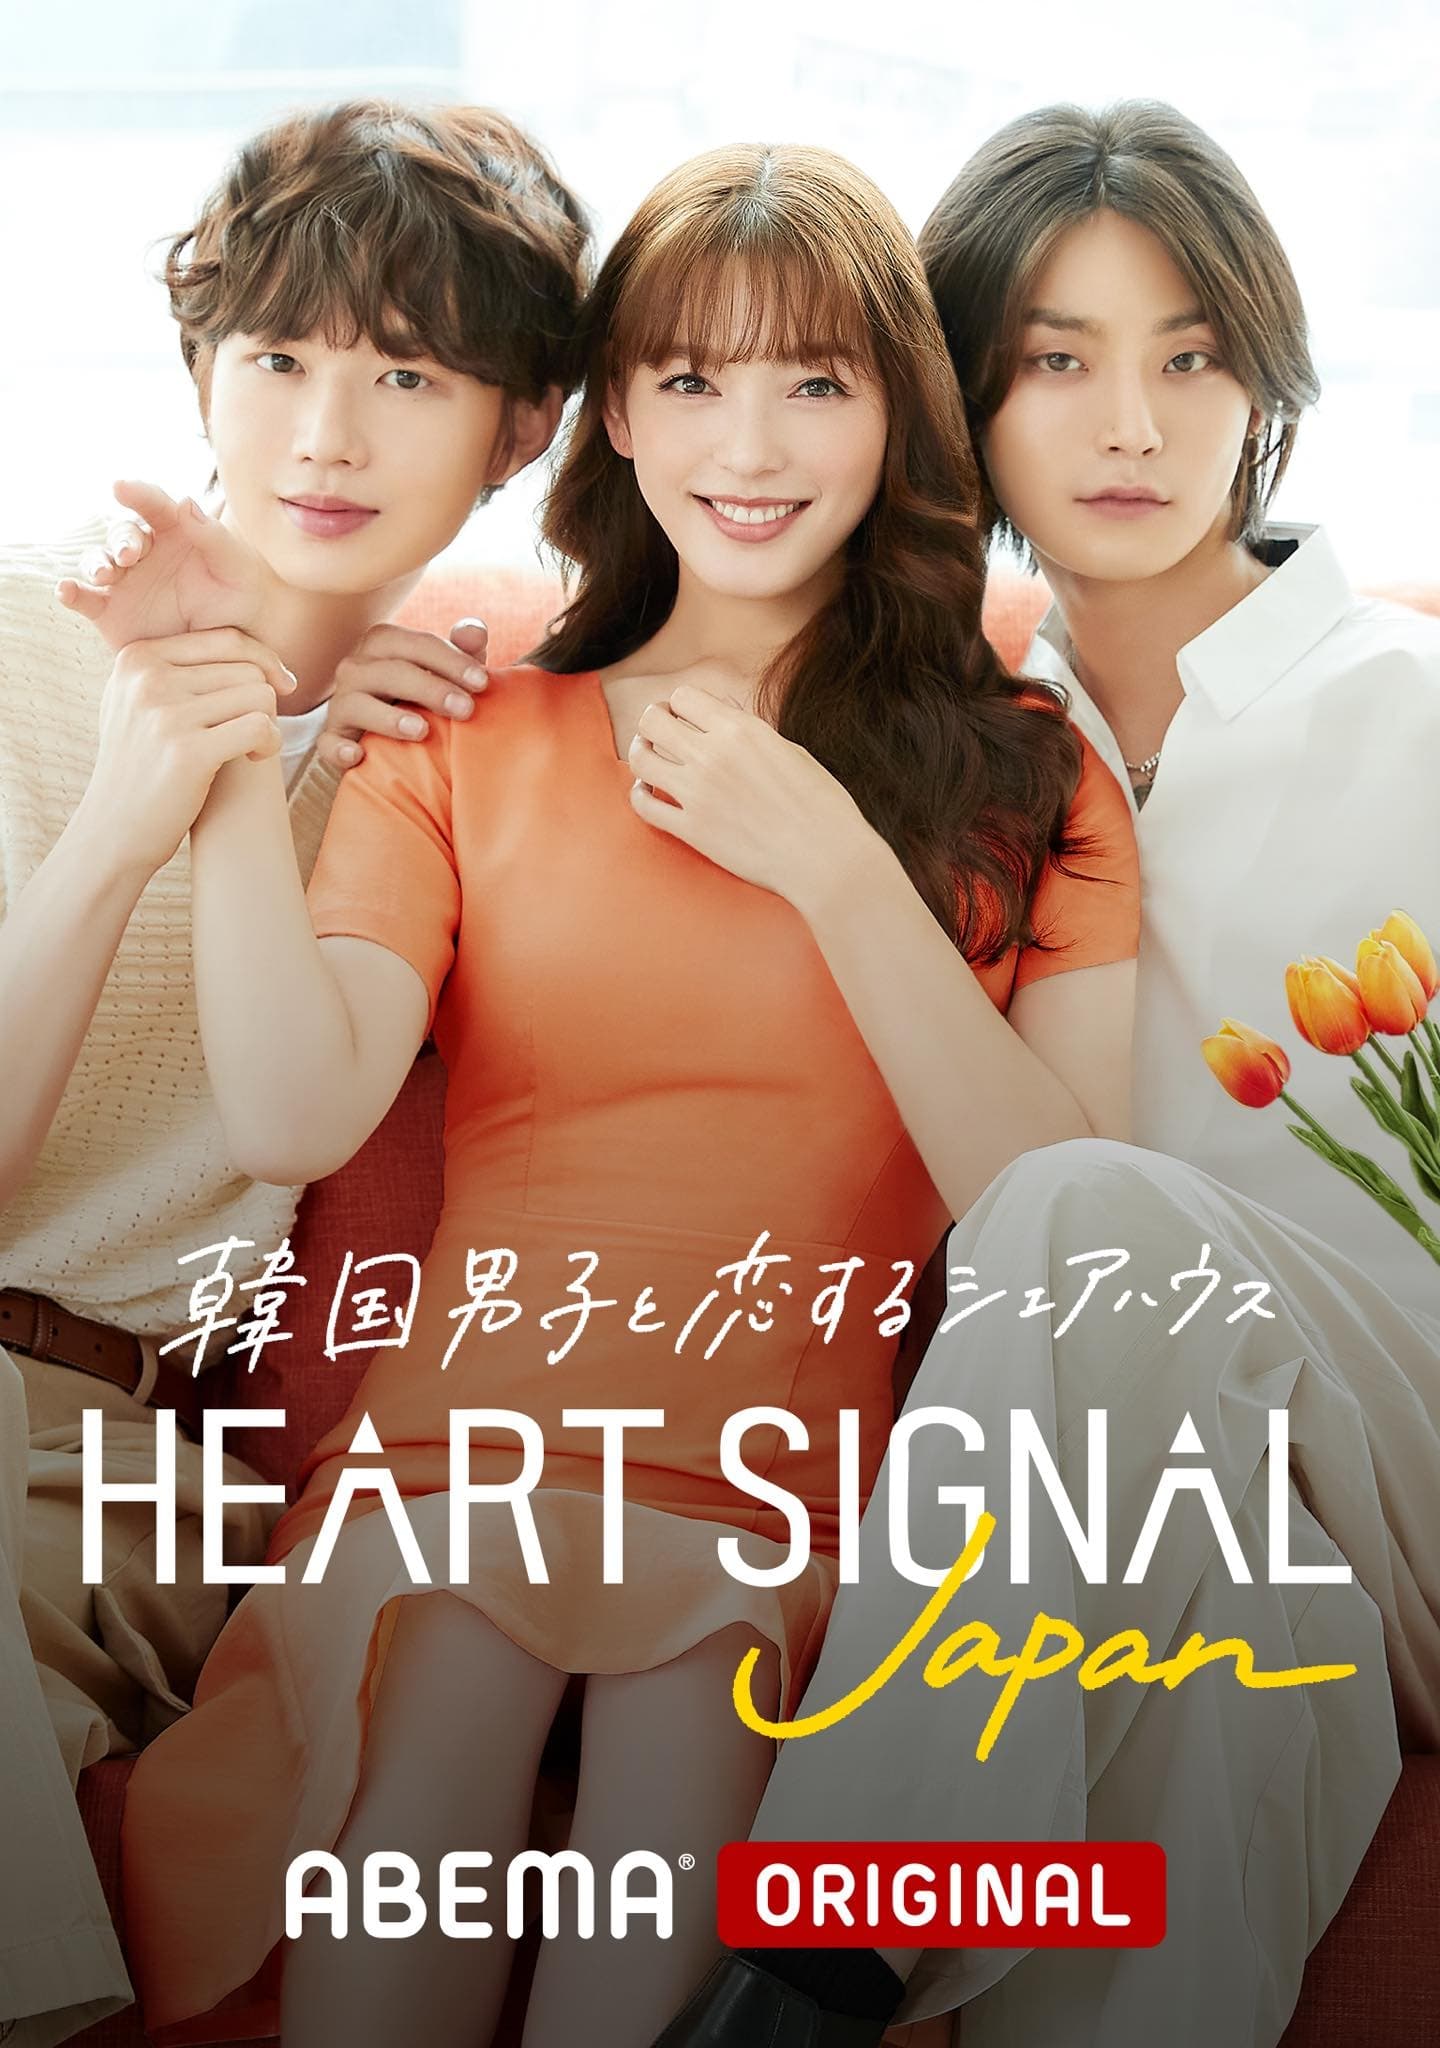 Heart Signal Japan